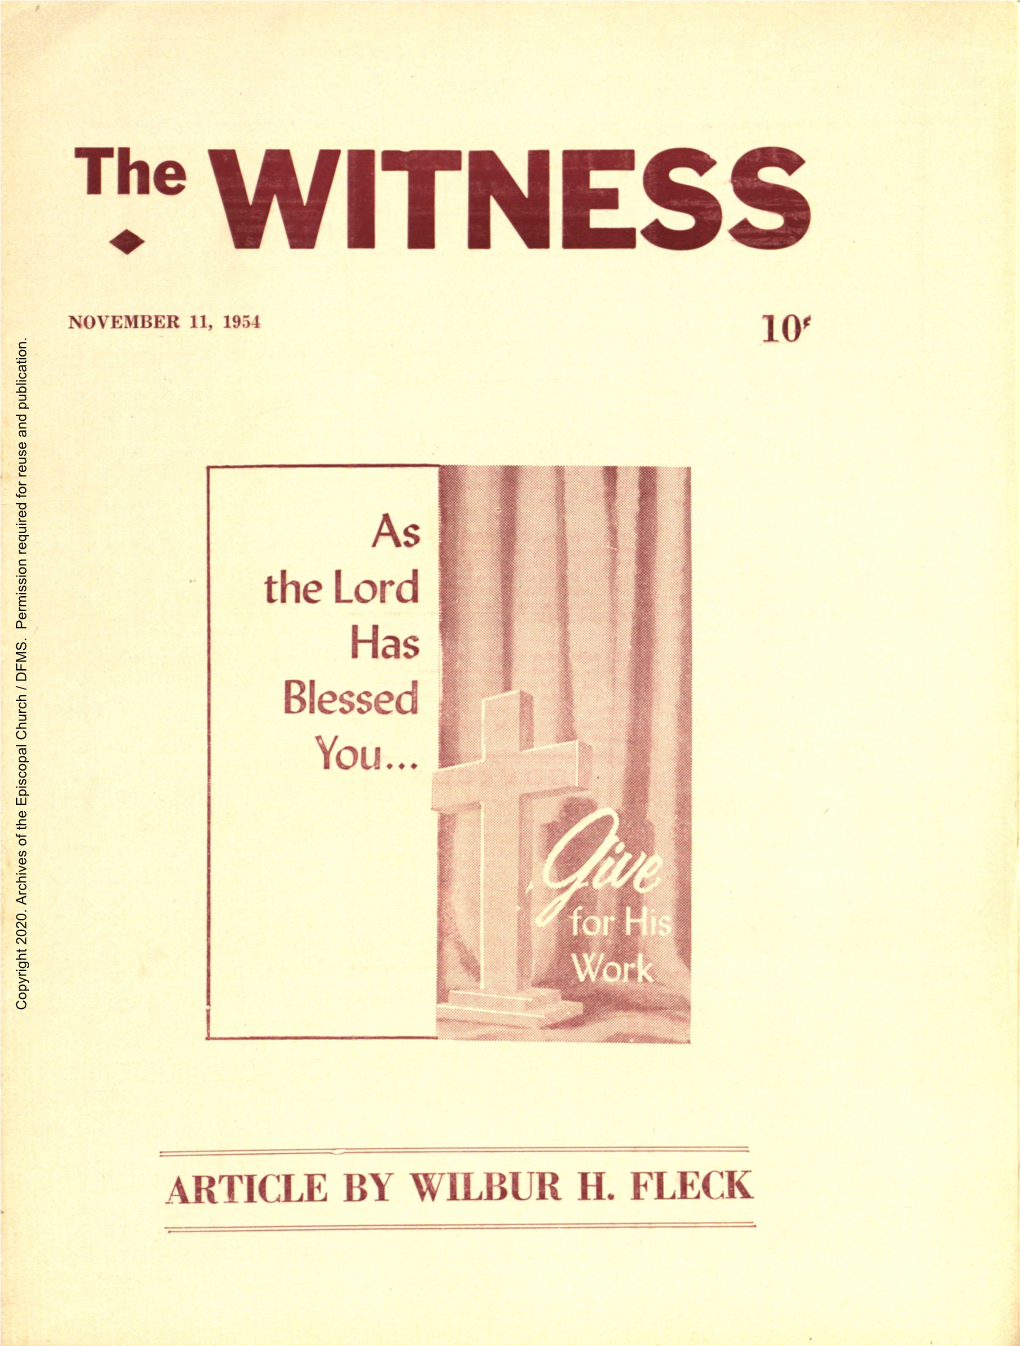 1954 the Witness, Vol. 41, No. 51. November 11, 1954